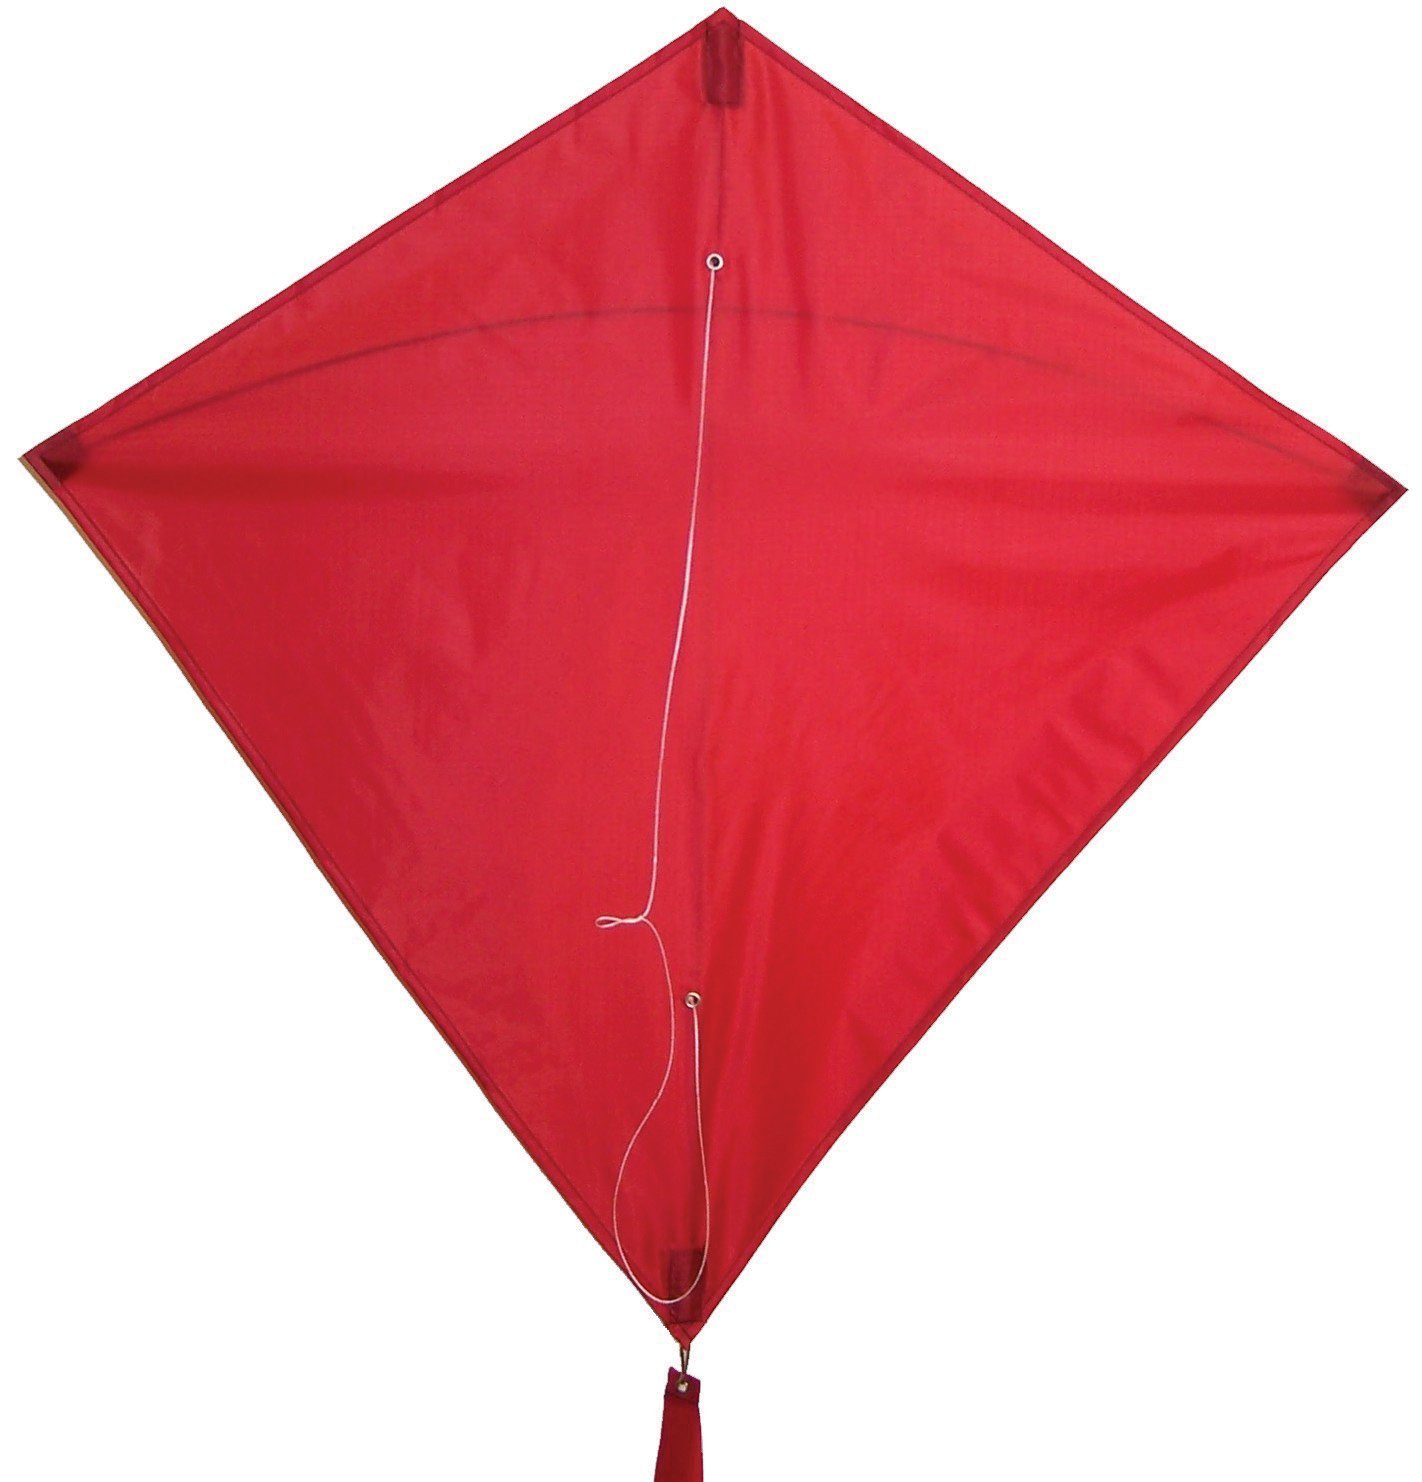 Amazon.com : In the Breeze Red 30 Inch Diamond Kite - Single Line ...